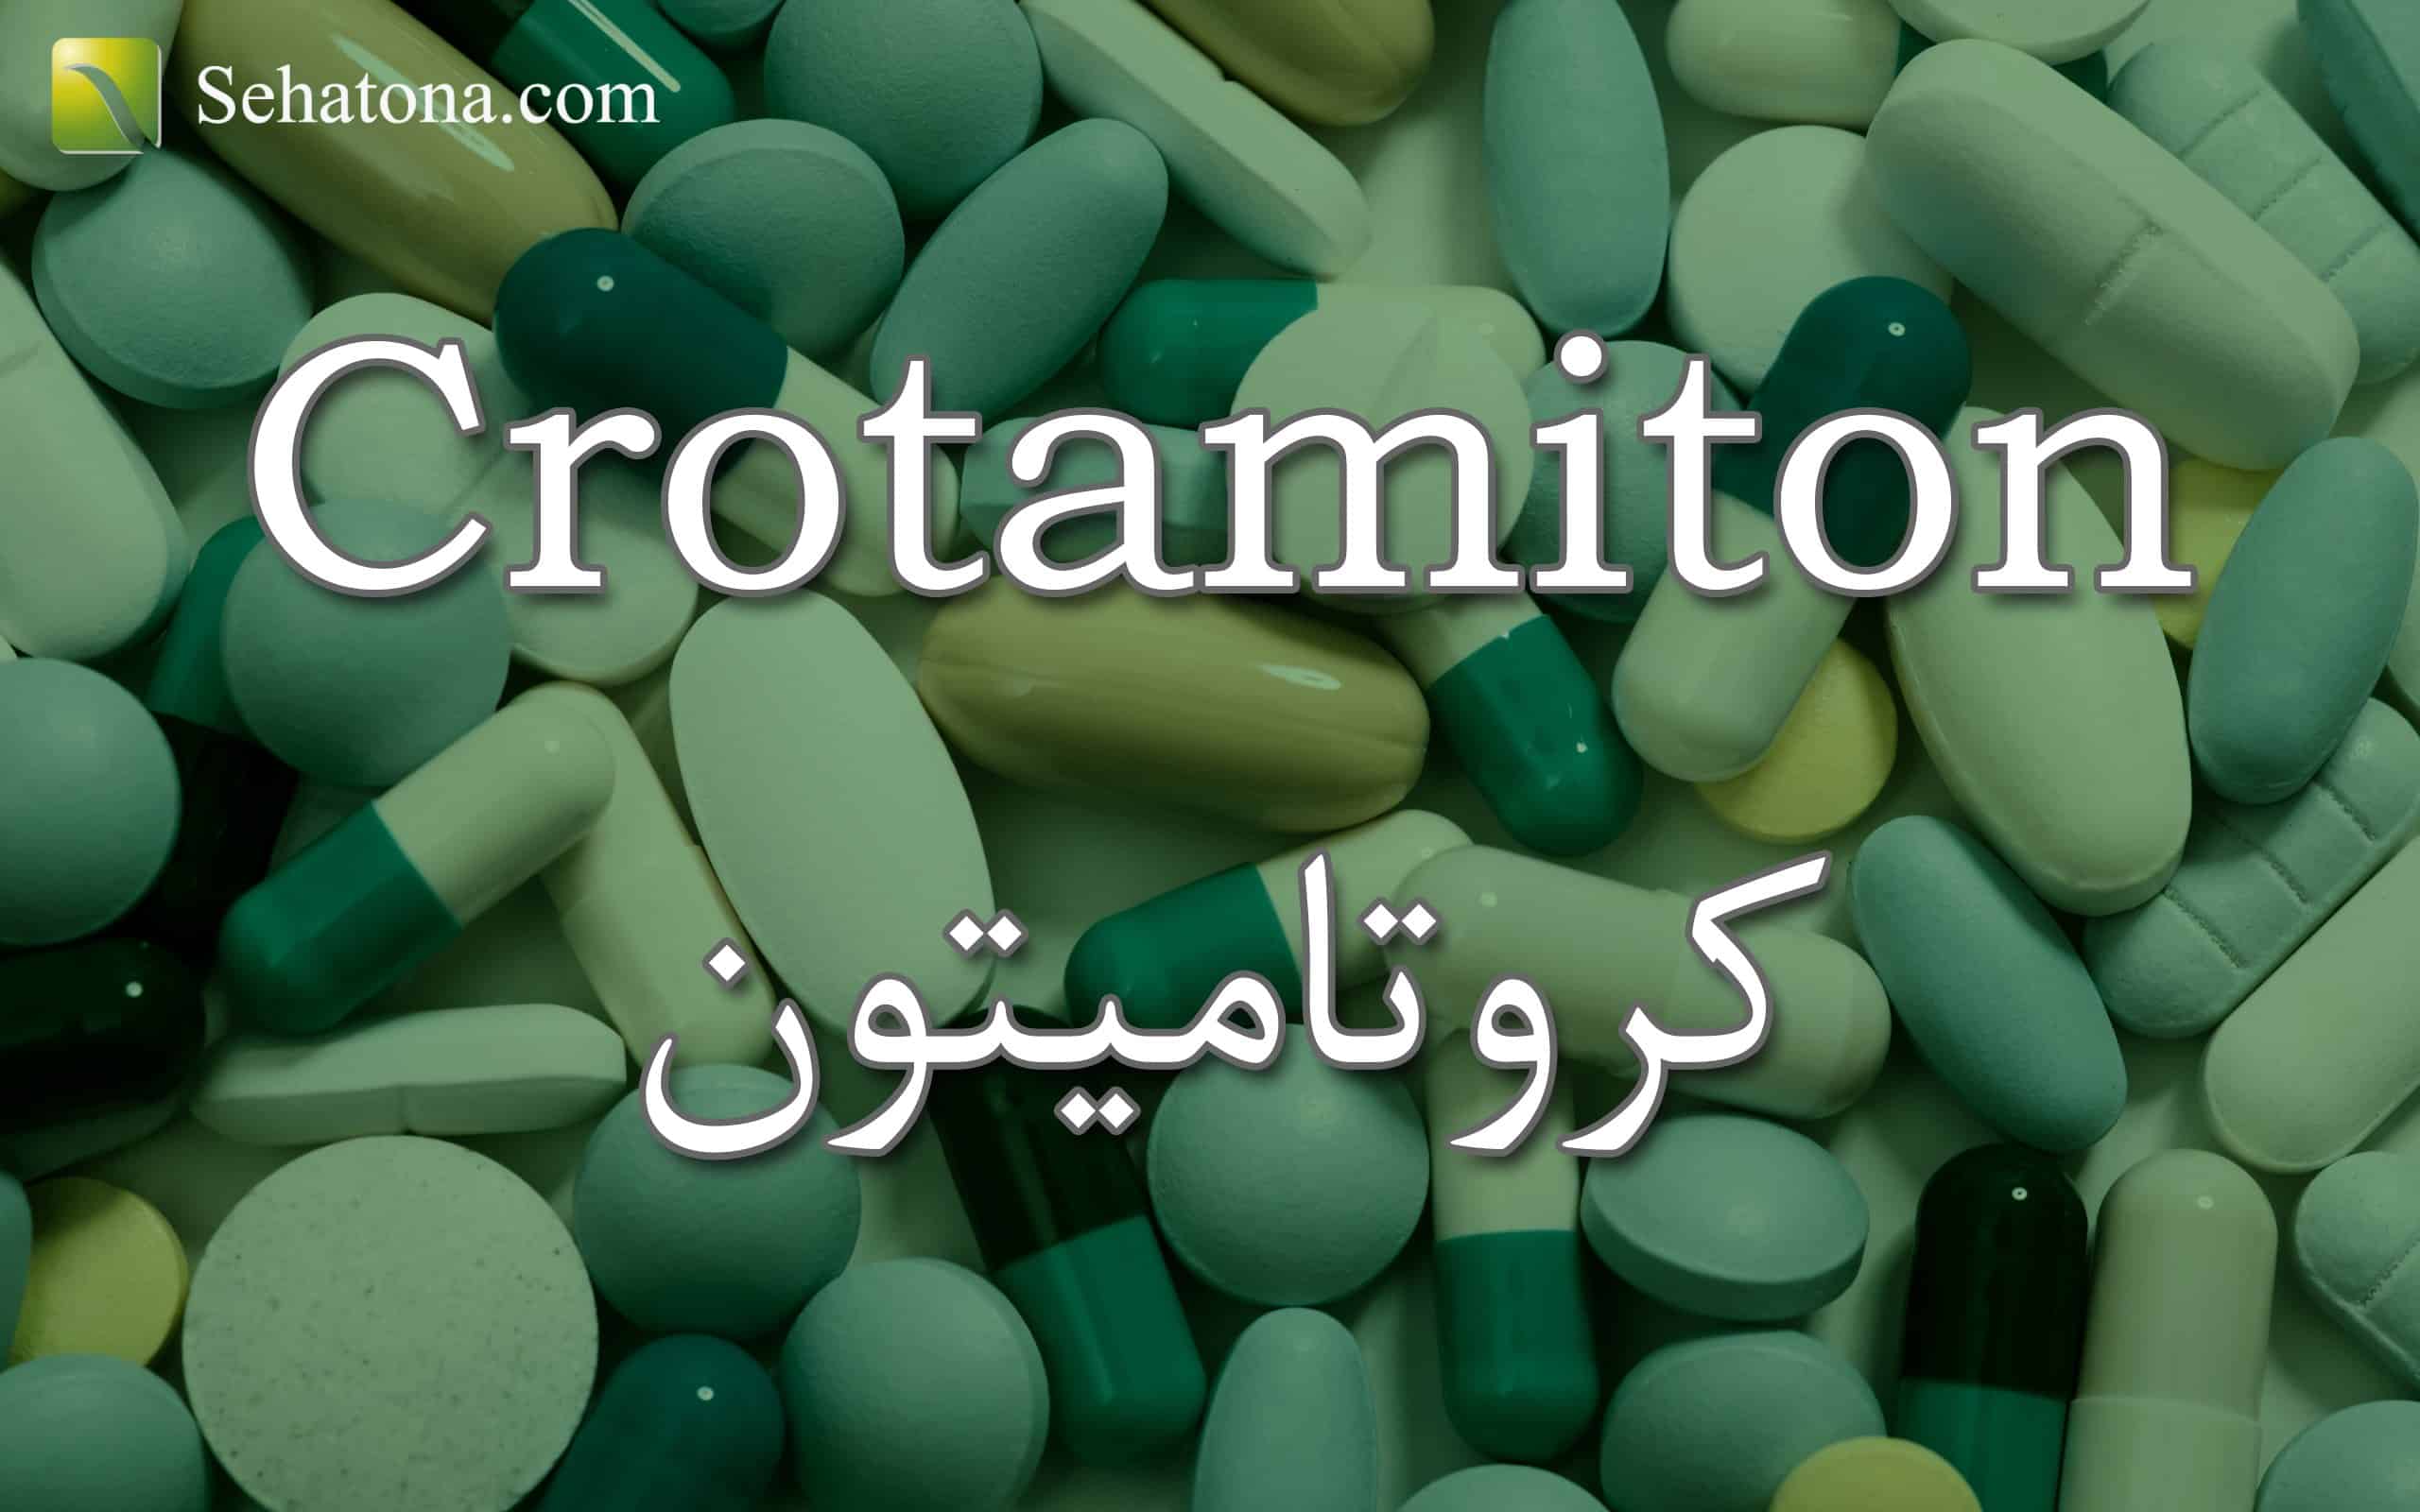 Crotamiton